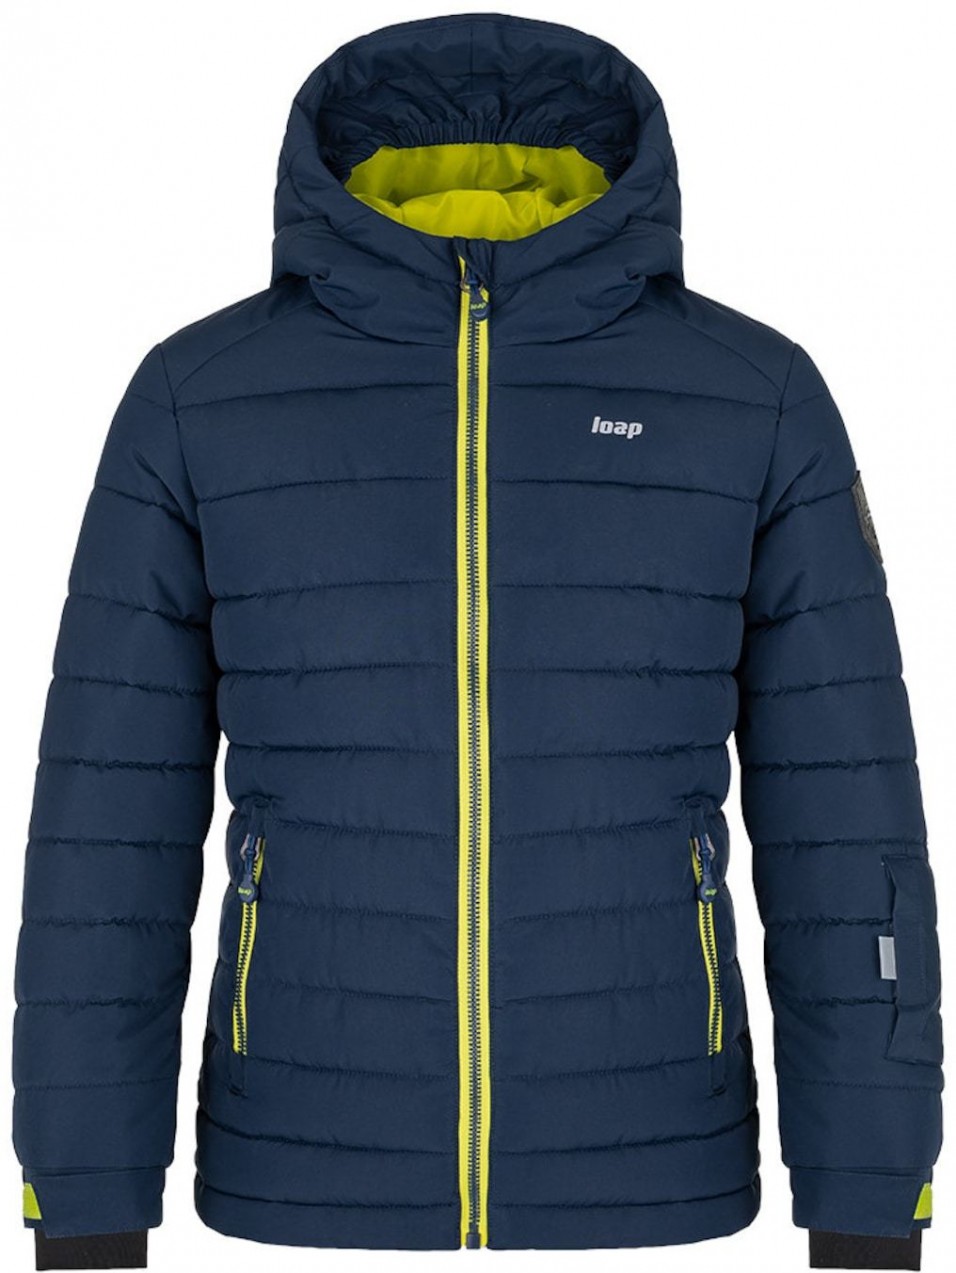 FULER children's ski jacket blue